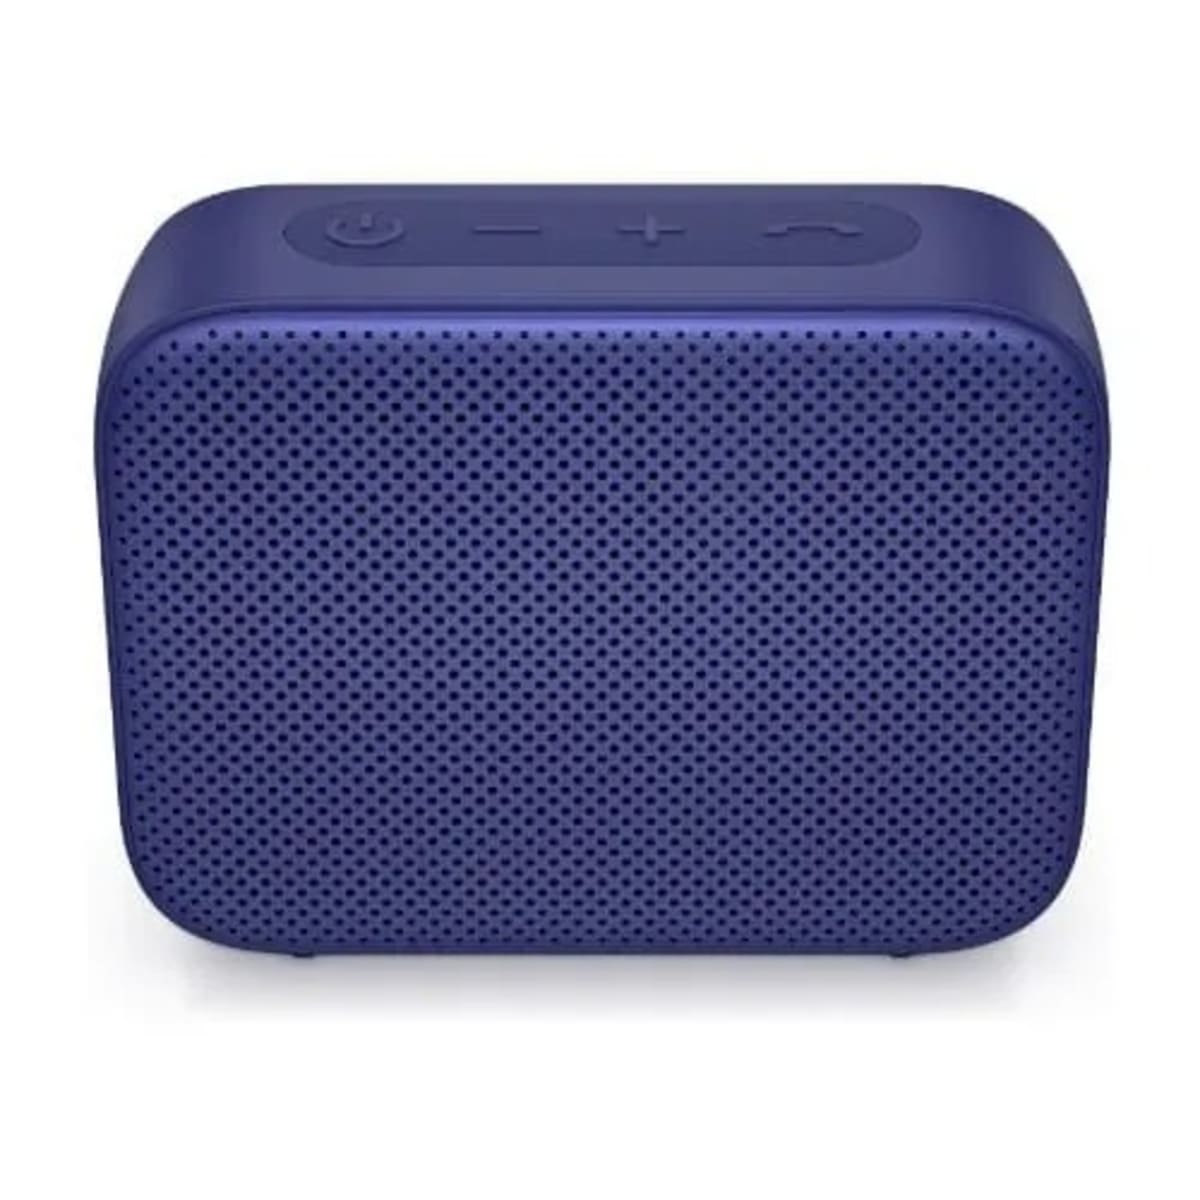 350 - Shopping Wireless HP Speaker | Bluetooth Konga - Blue Online